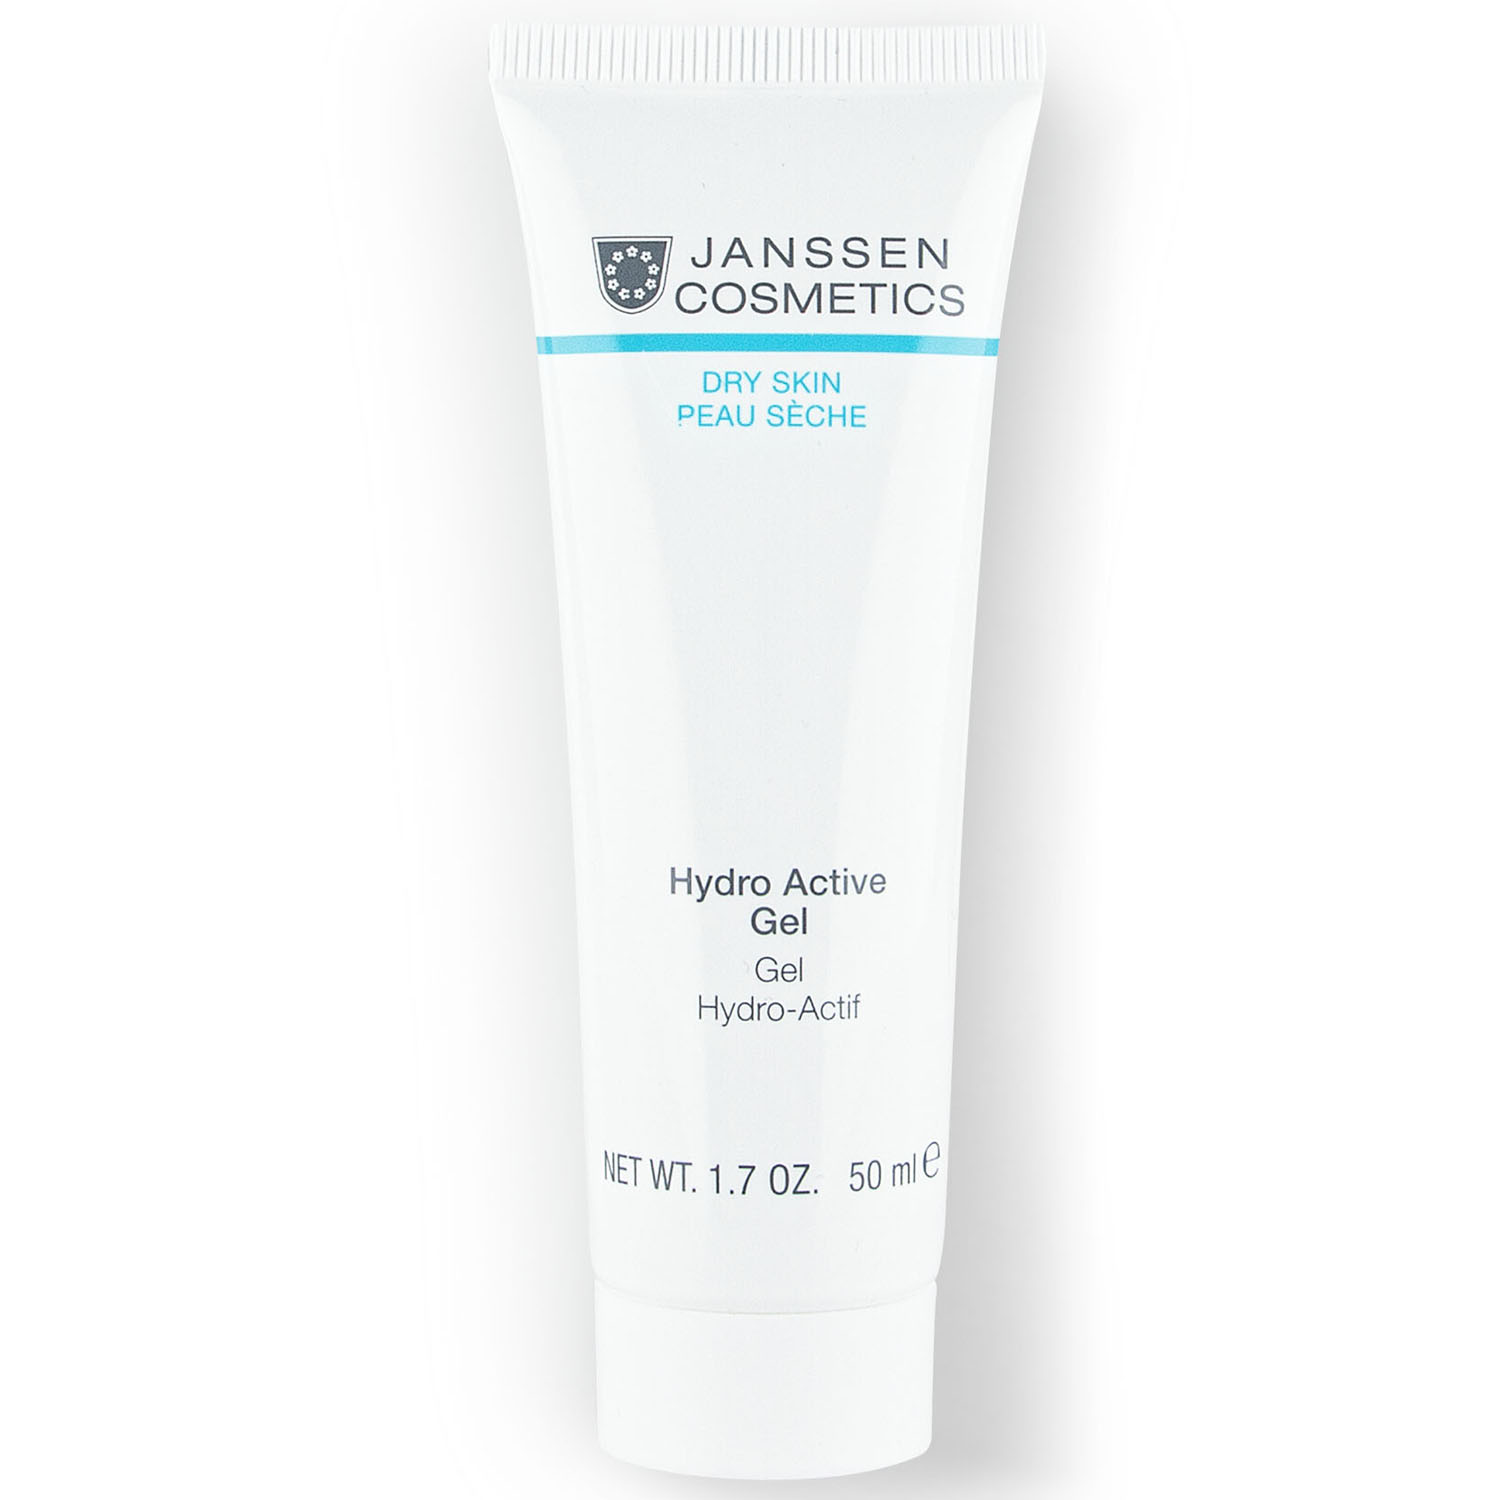 Janssen Cosmetics Активно увлажняющий гель-крем Hydro Active Gel, 50 мл (Janssen Cosmetics, Dry Skin)